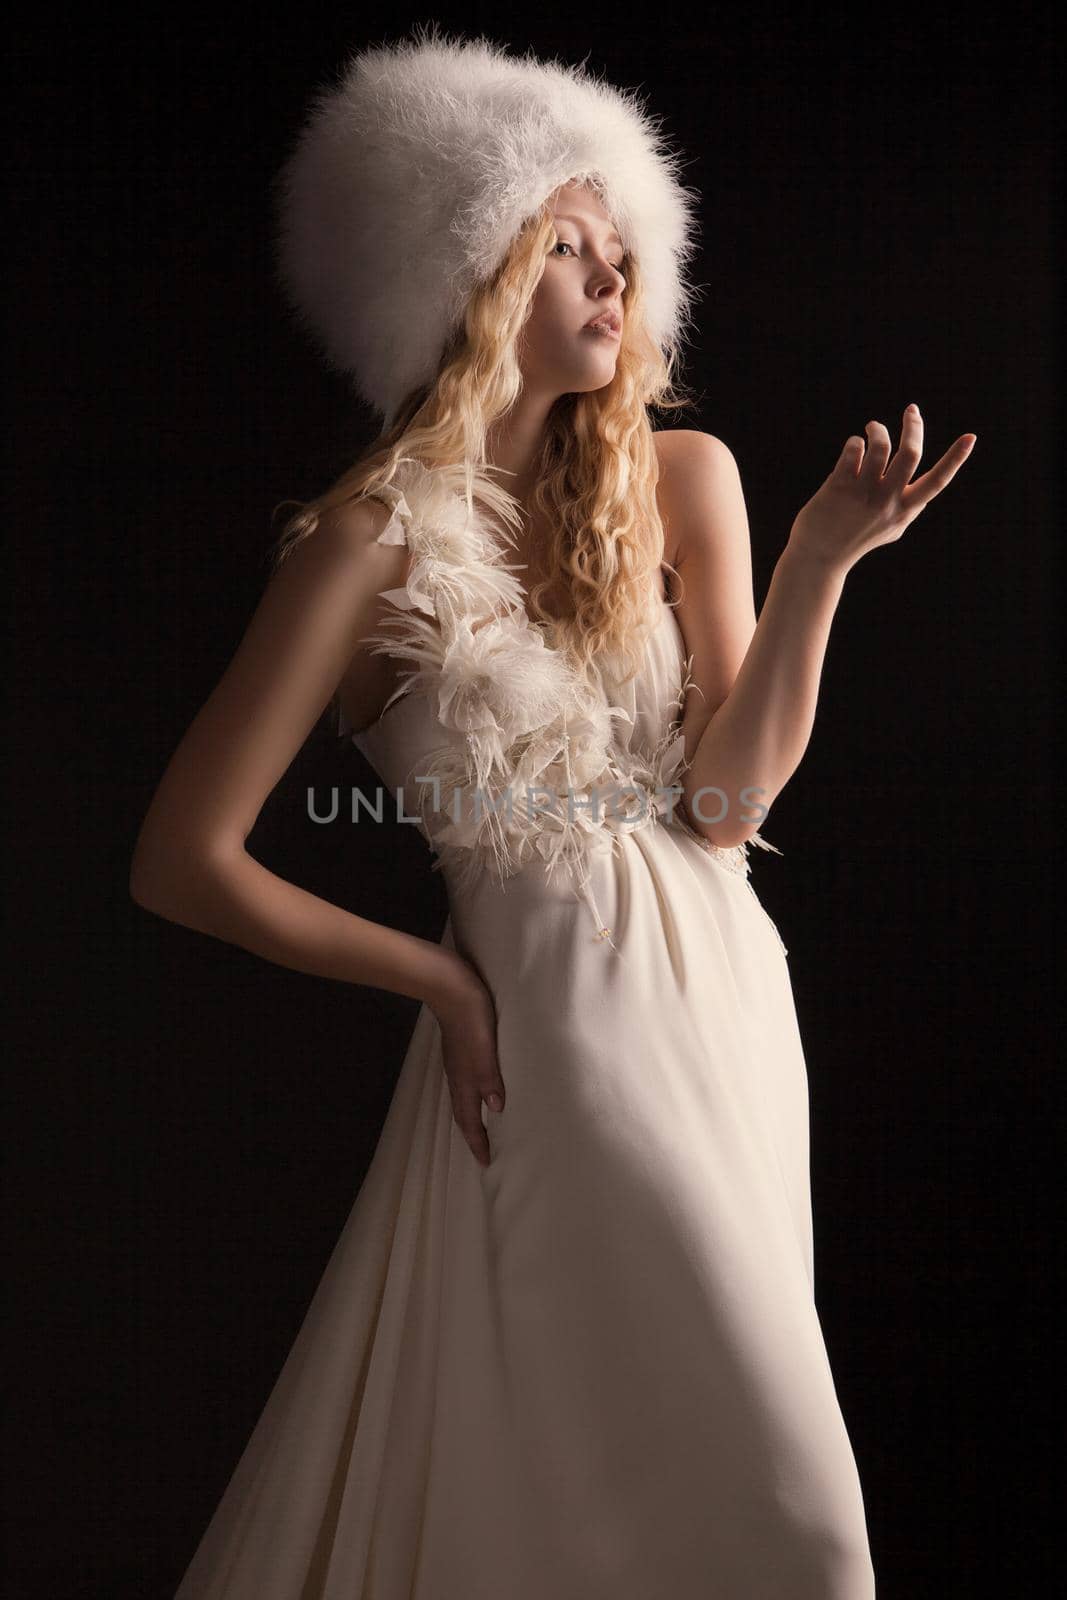 The beautiful young woman in a wedding dress by Julenochek